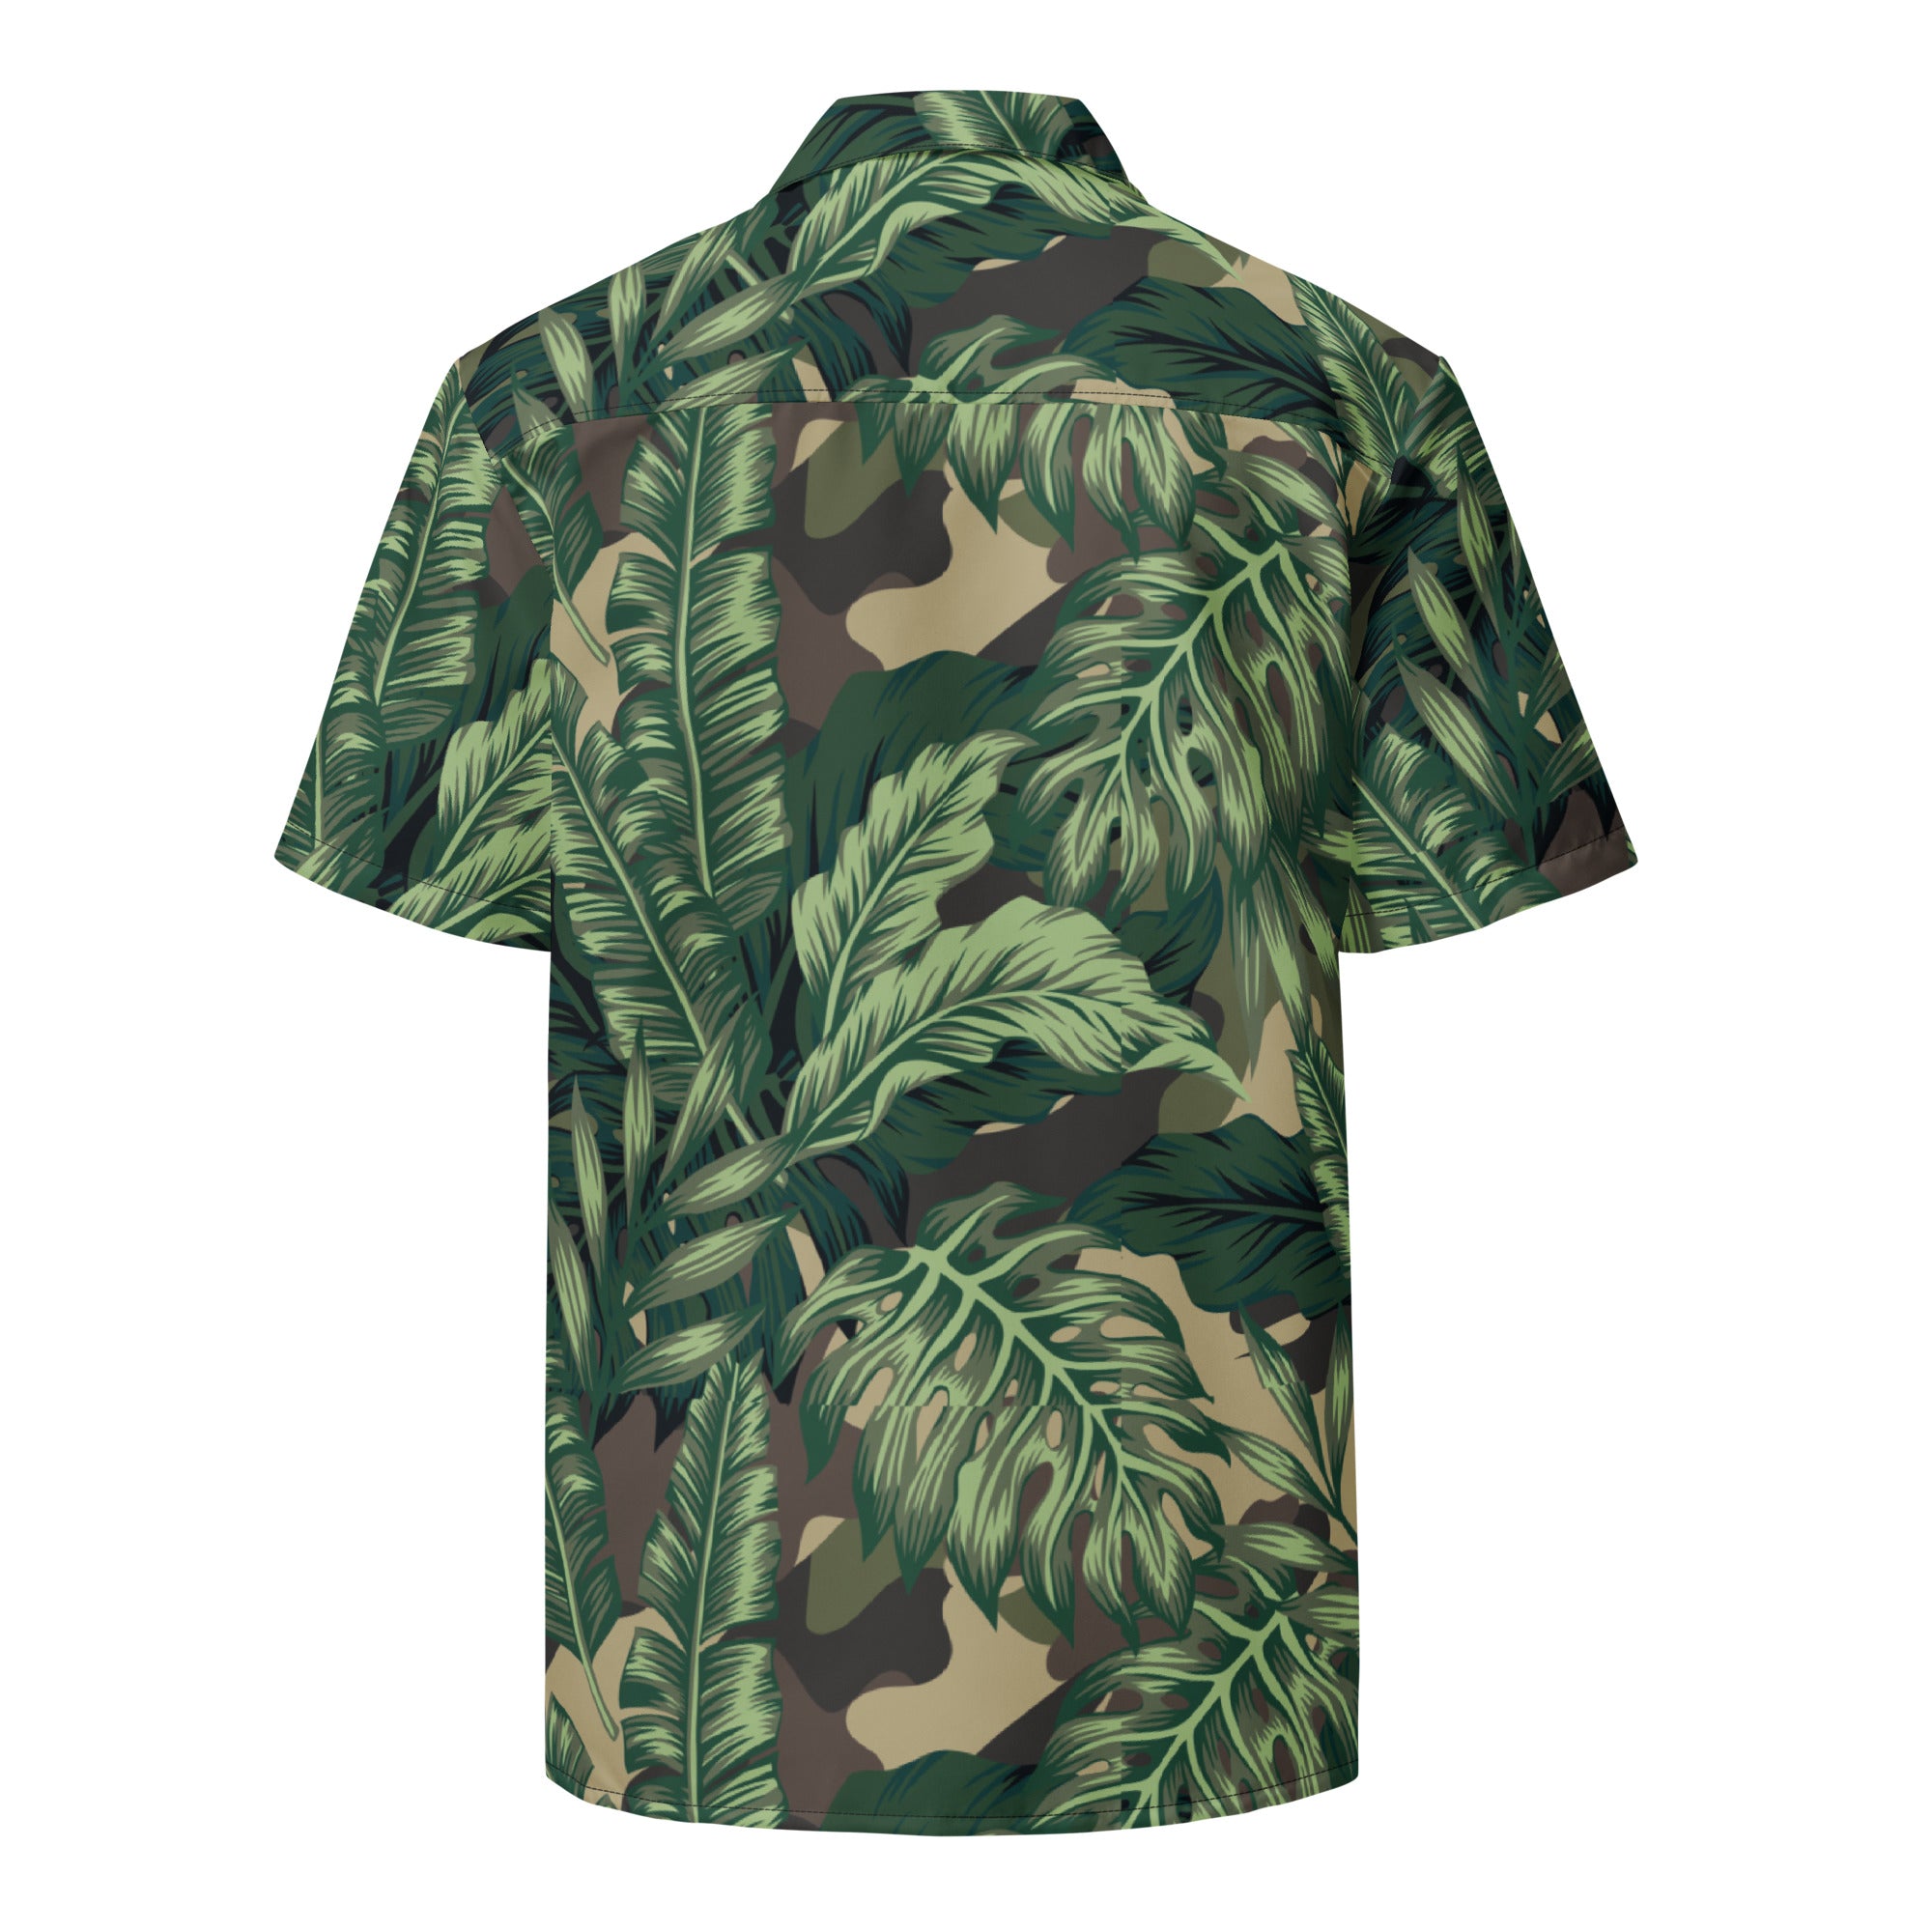 Tropicamo Tacticombo Hawaiian Shirt